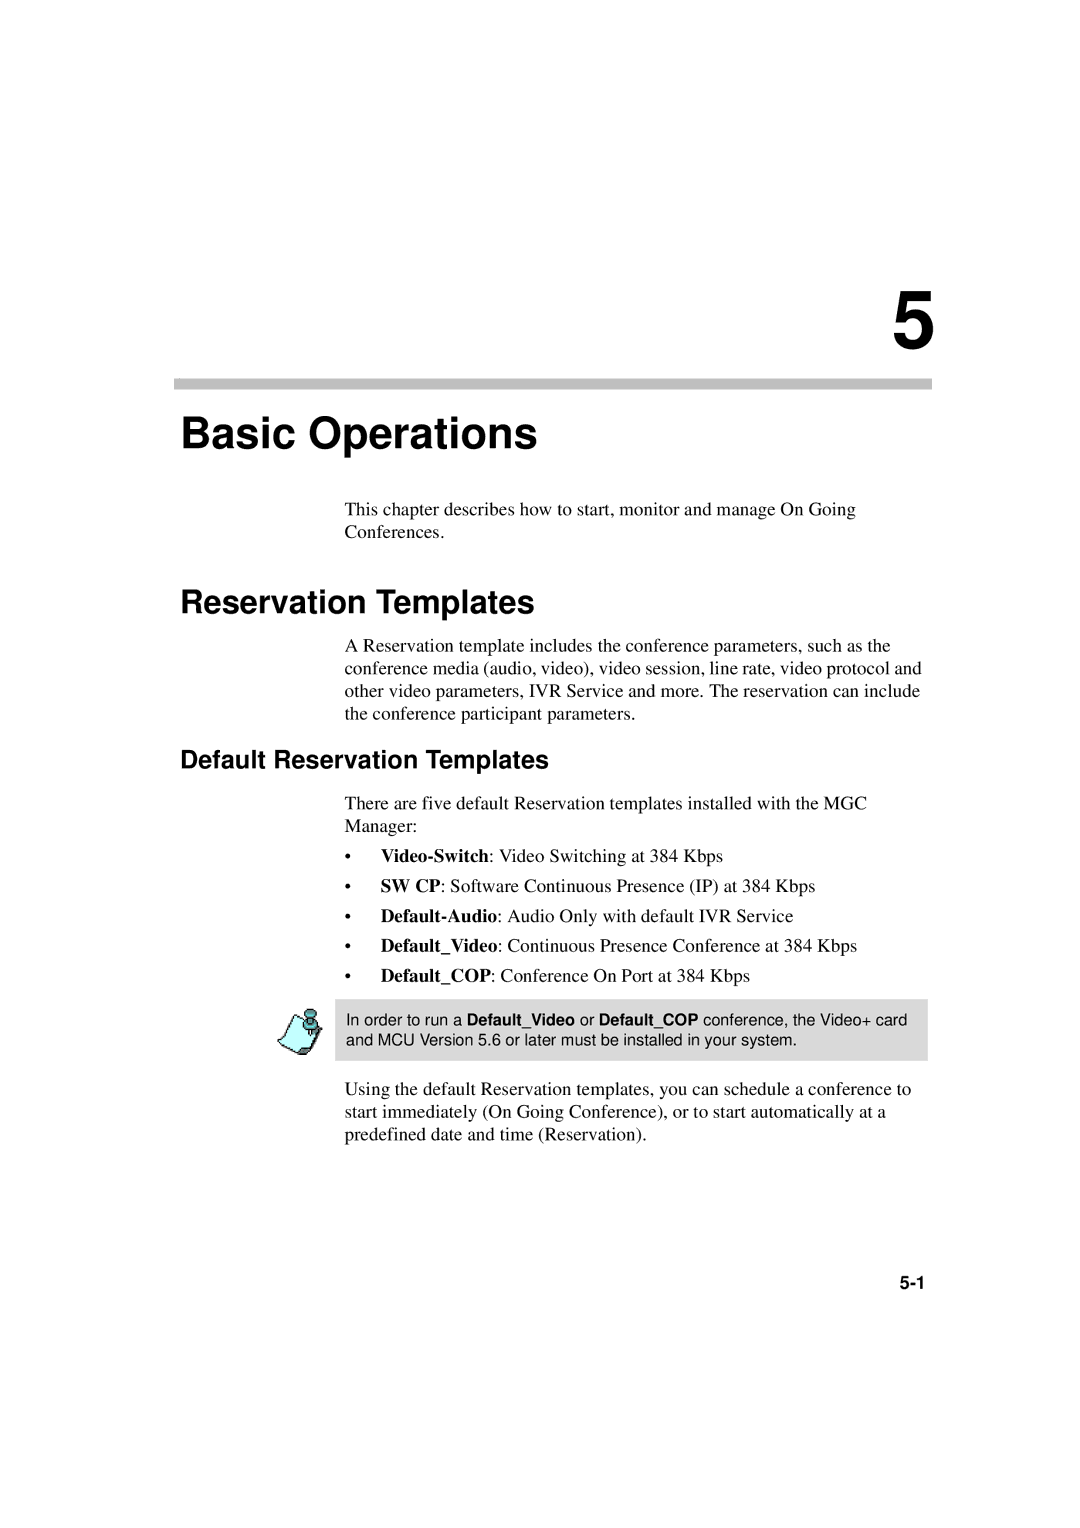 Polycom DOC2231A manual Default Reservation Templates 